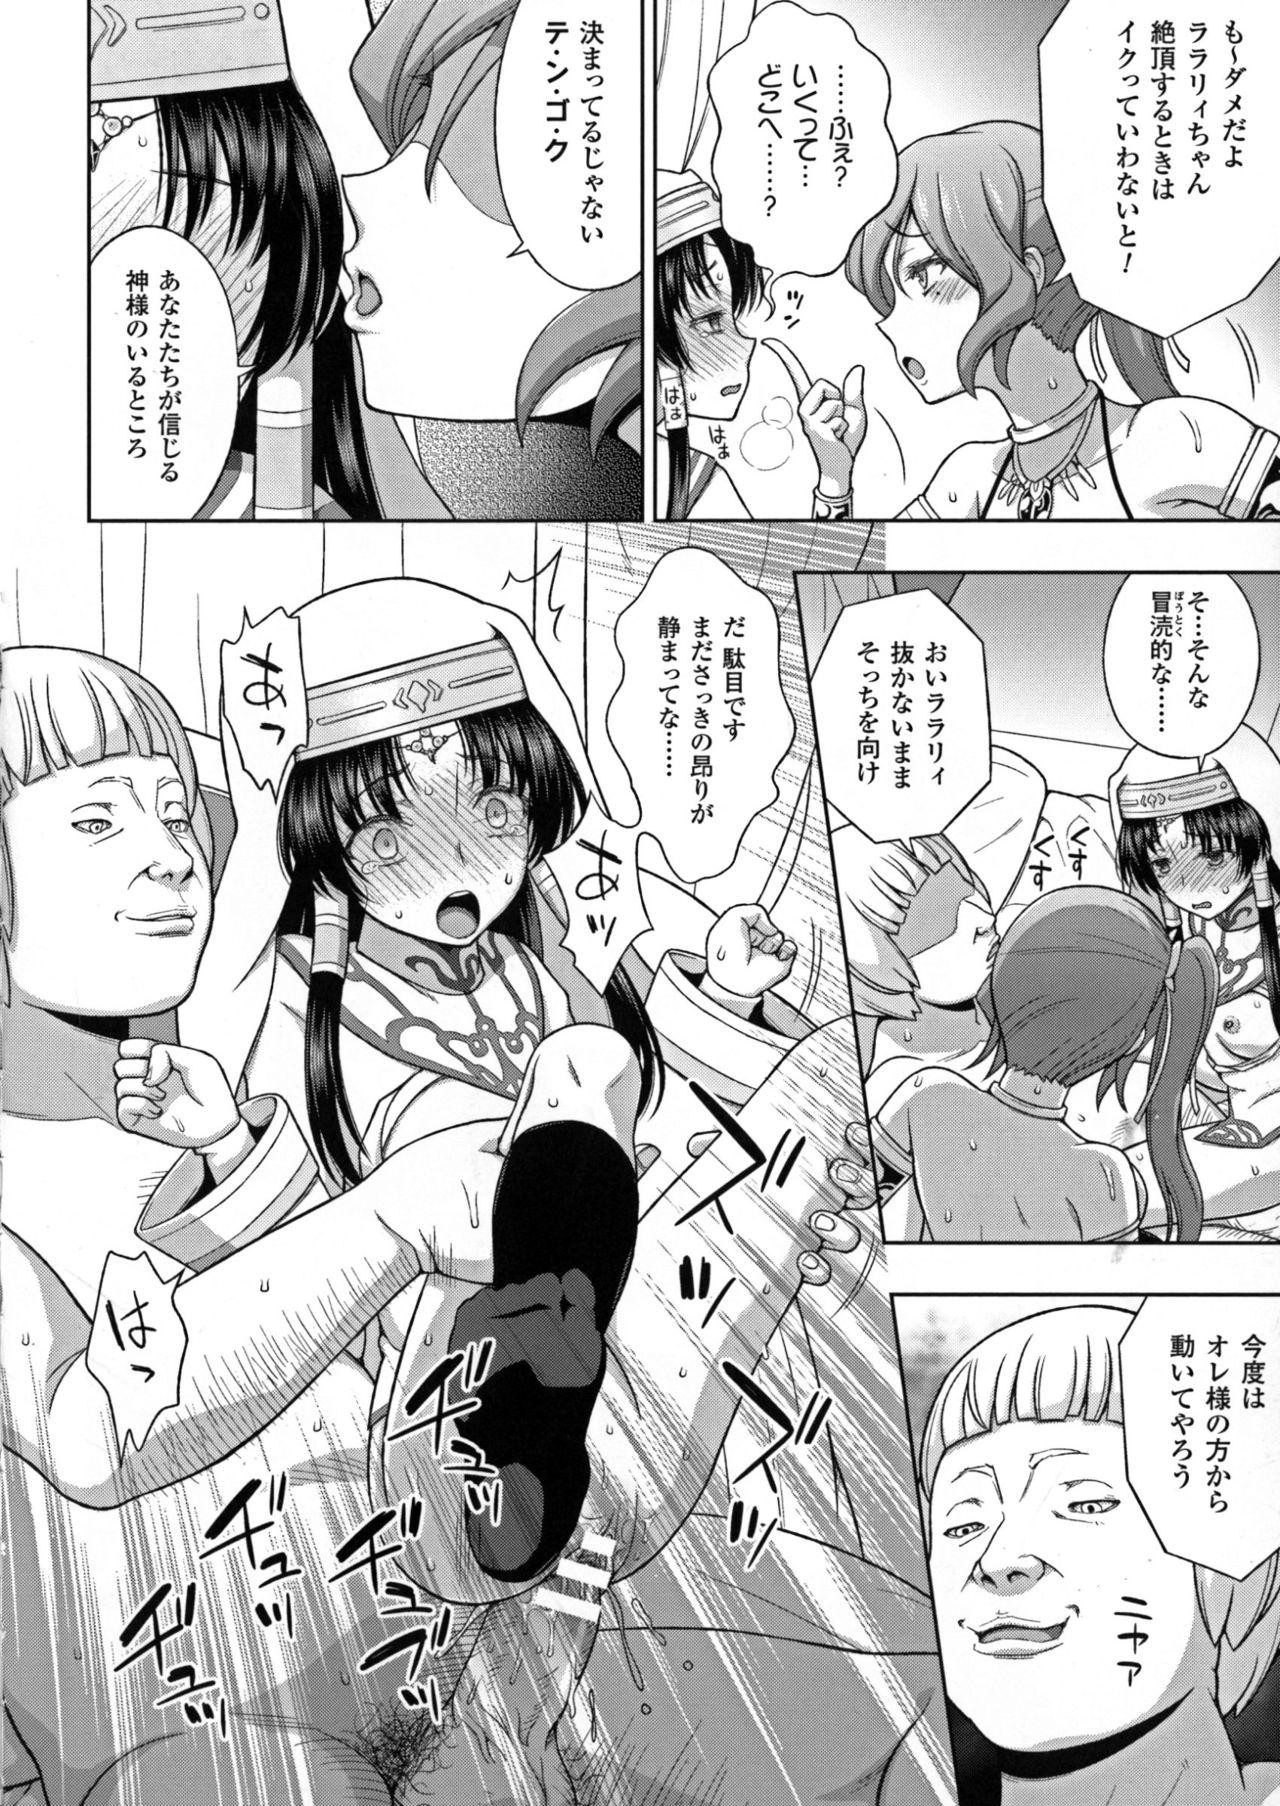 Seigi no Heroine Kangoku File DX Vol. 7 47